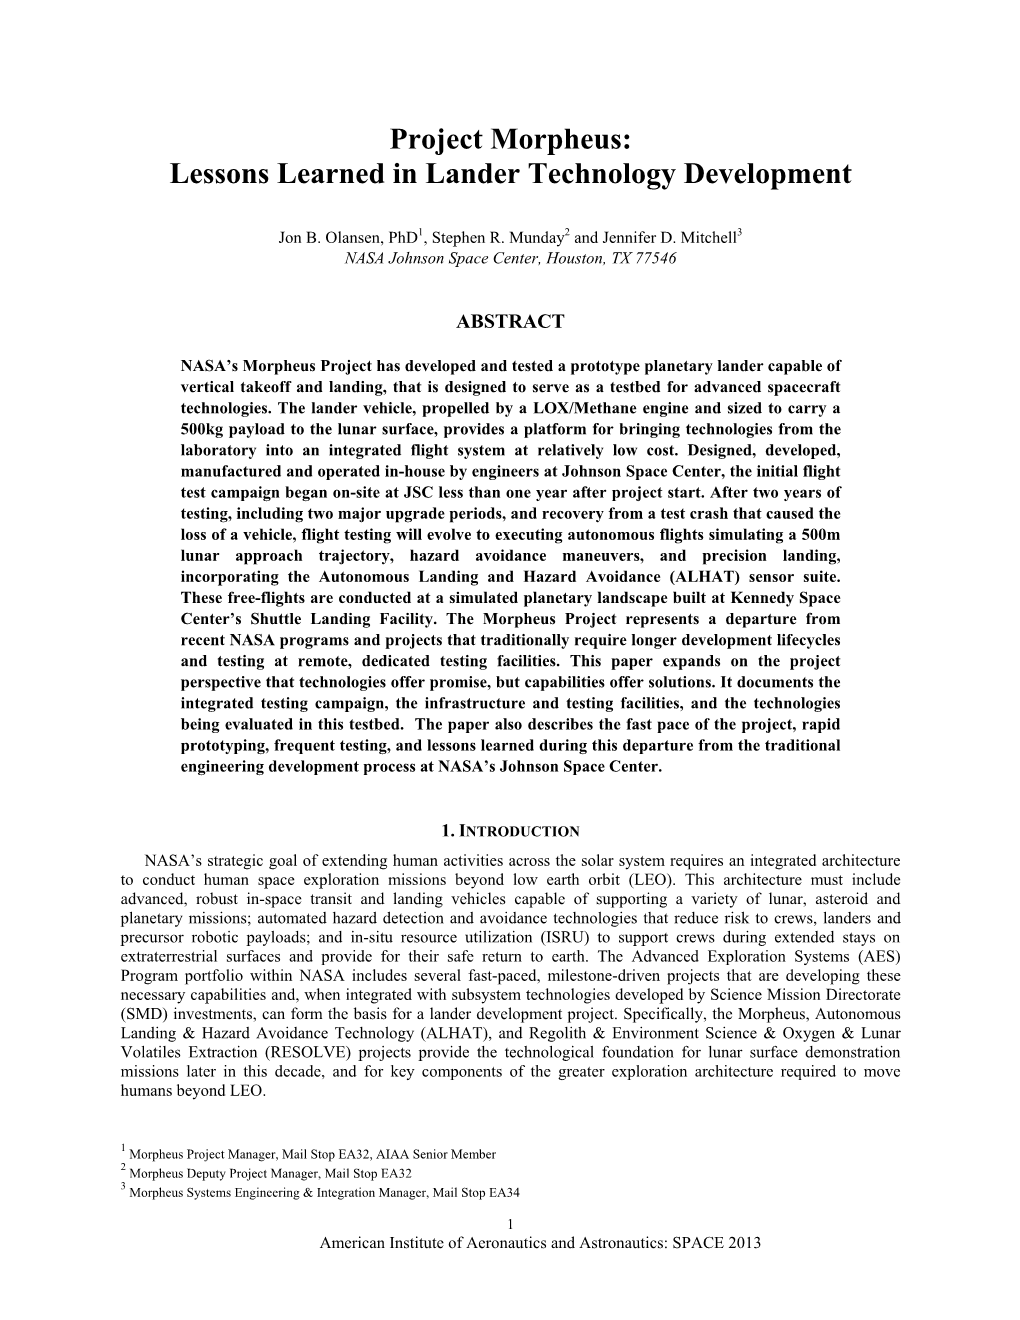 Project Morpheus: Lessons Learned in Lander Technology Development